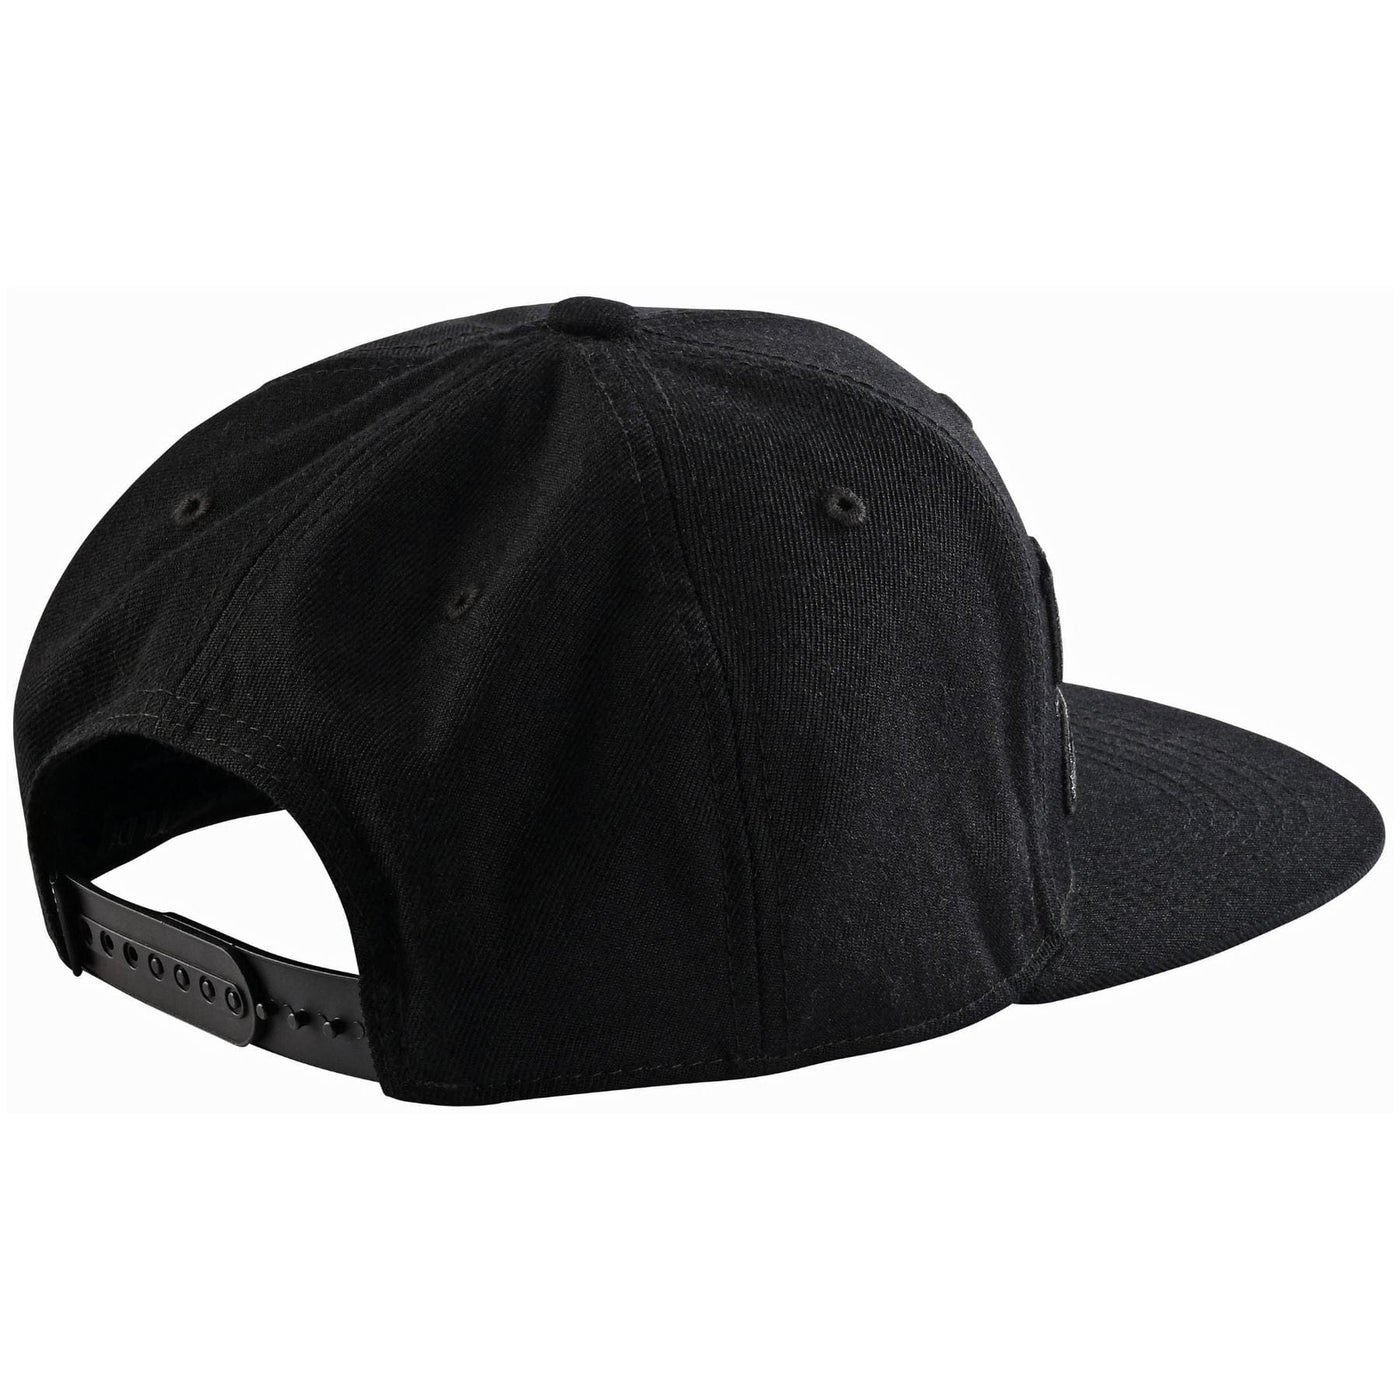 Troy Lee Designs 9FIFTY Drop In Snapback Hat - Black/Reflective